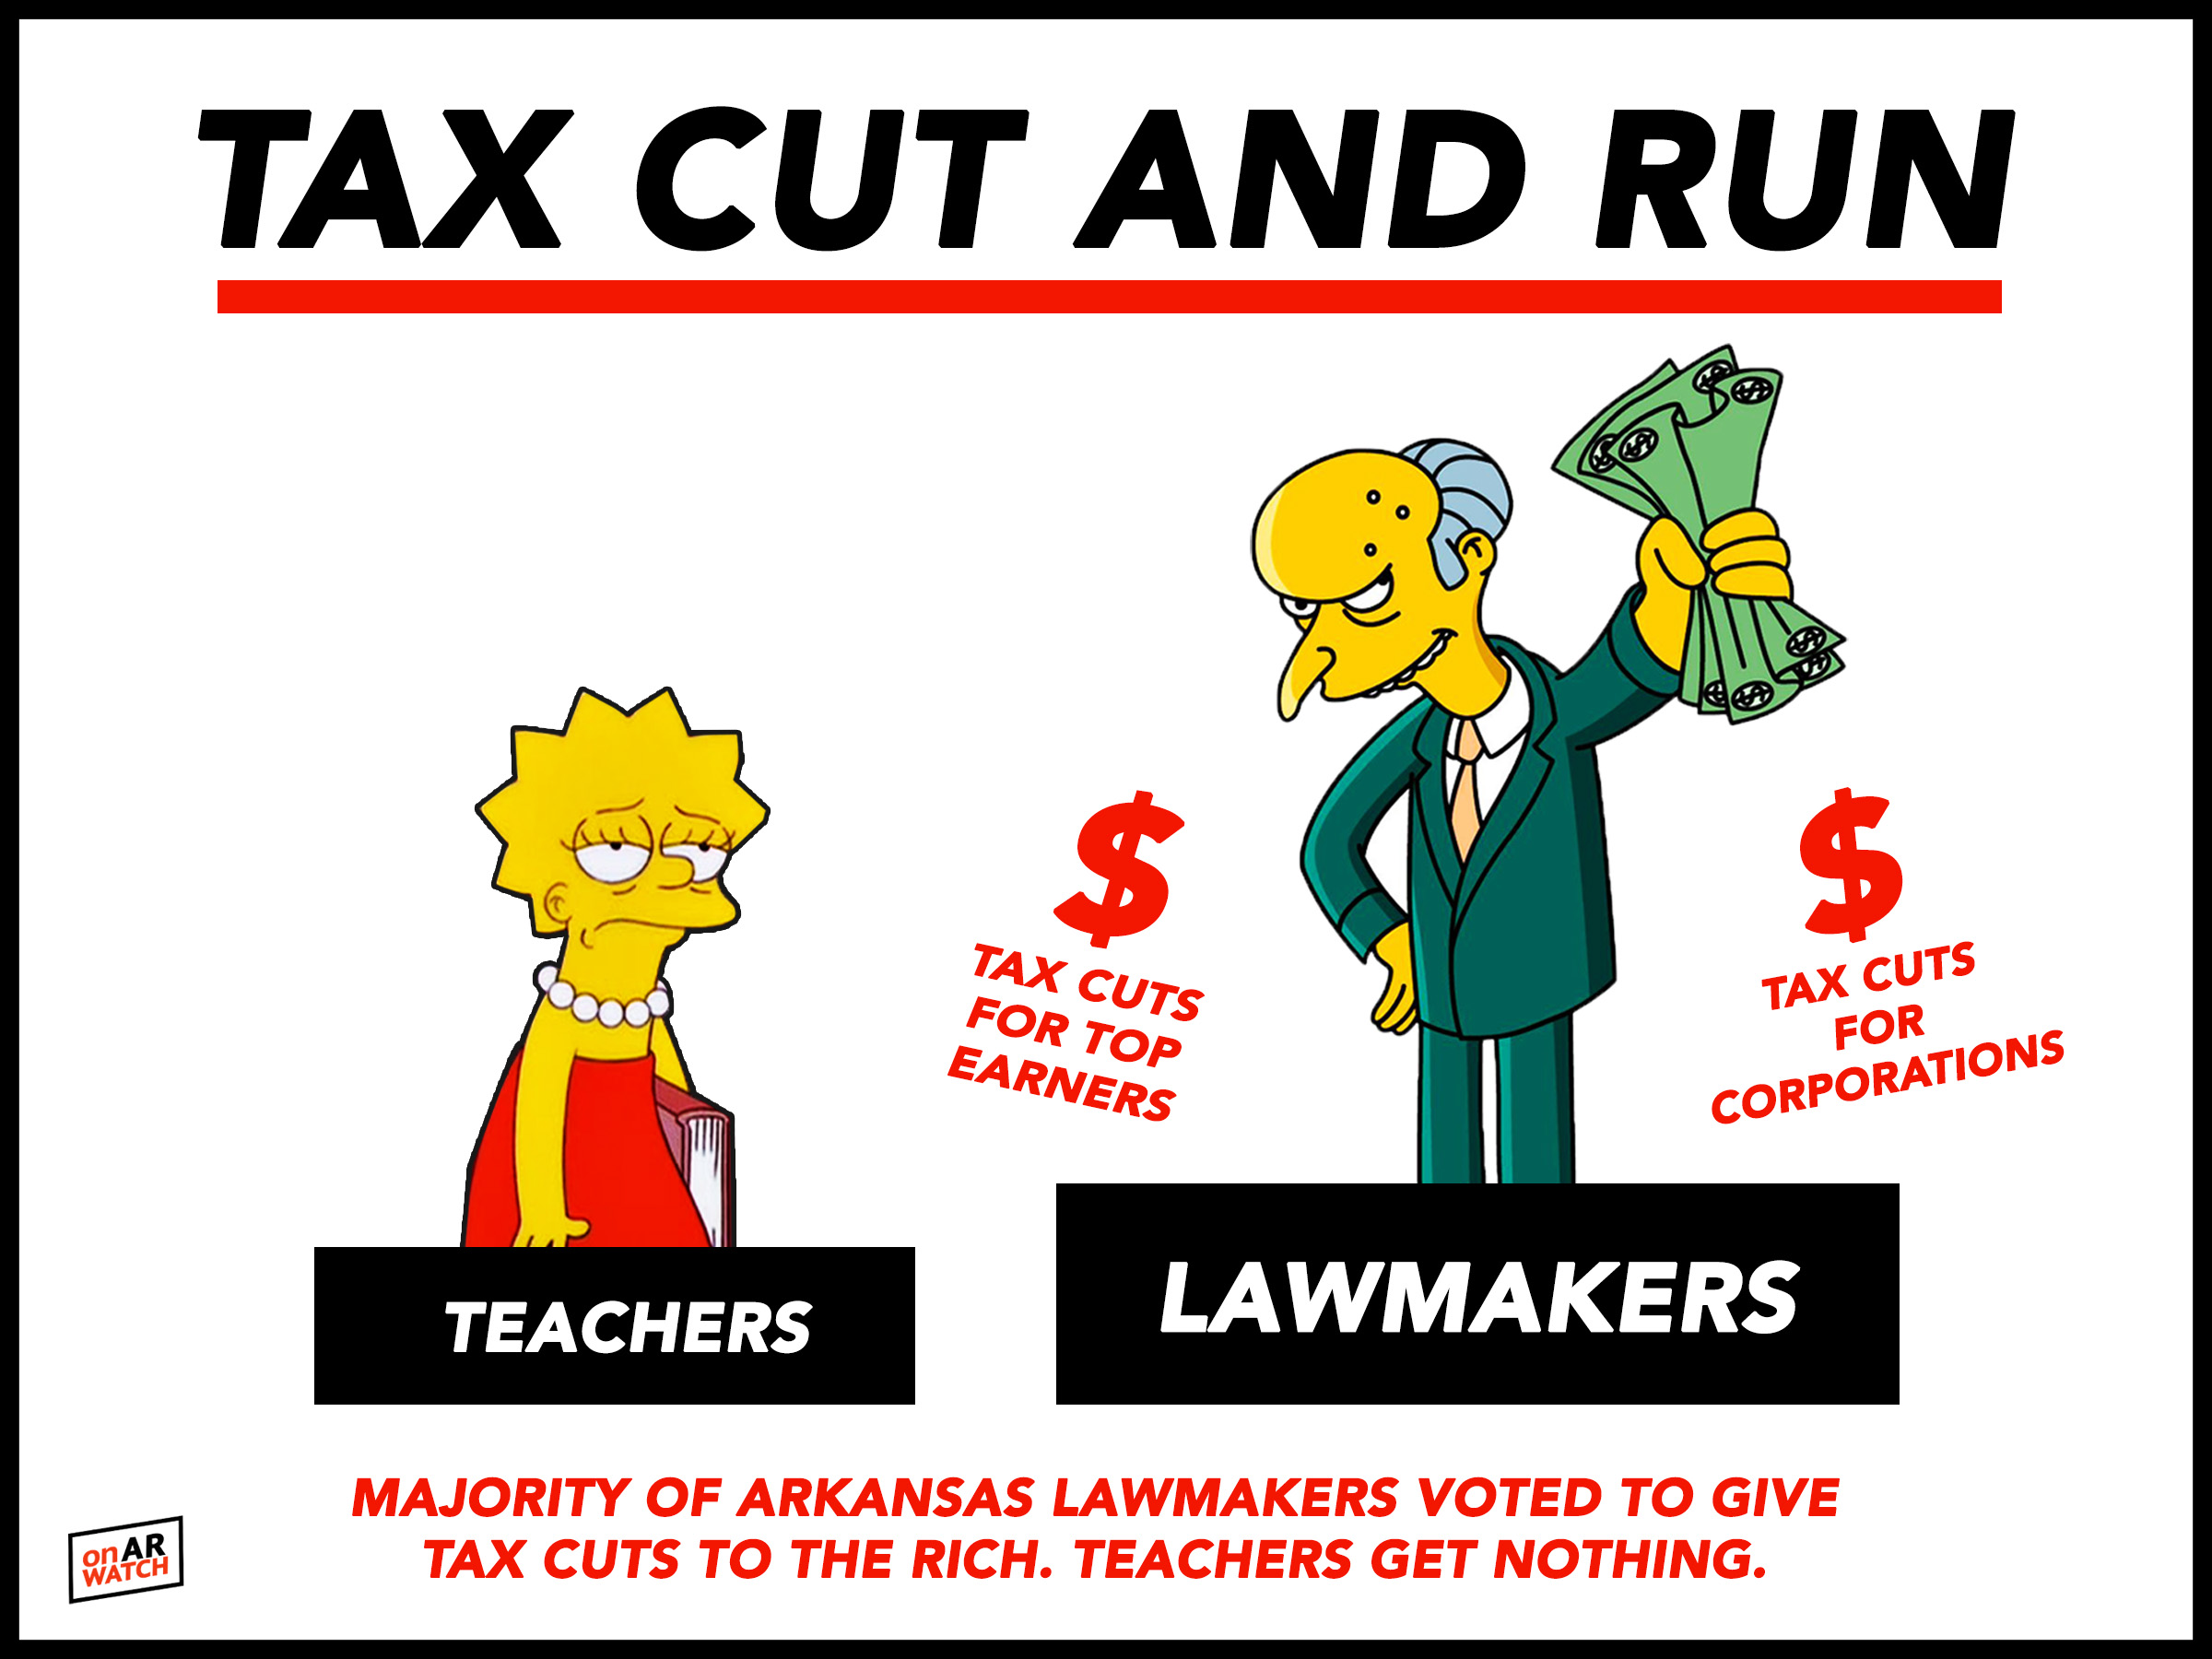 Tax Cut and Run